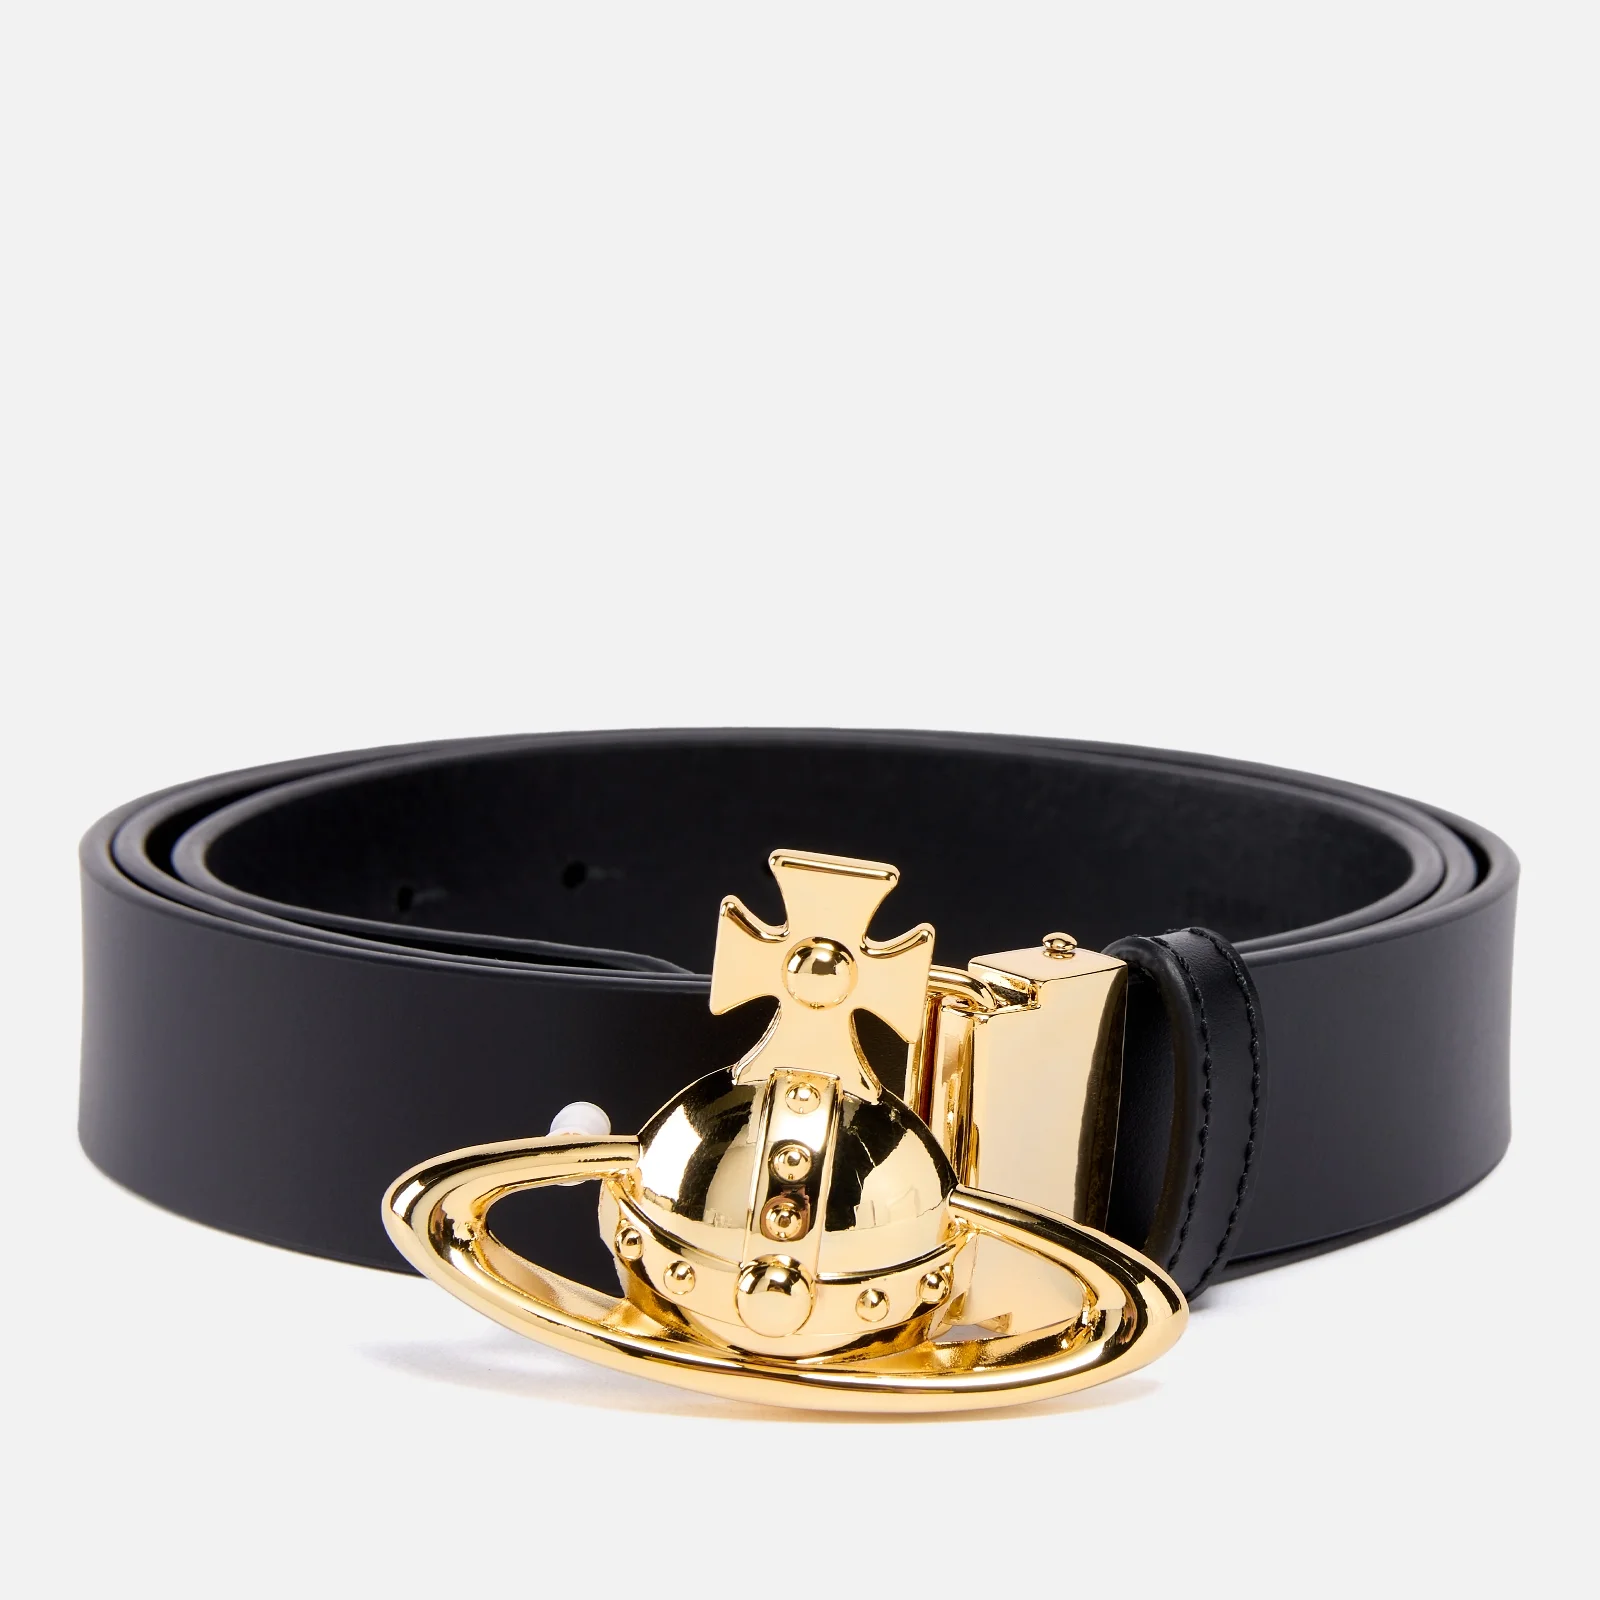 Vivienne Westwood Gold-Tone Orb Leather Buckle Belt Image 1